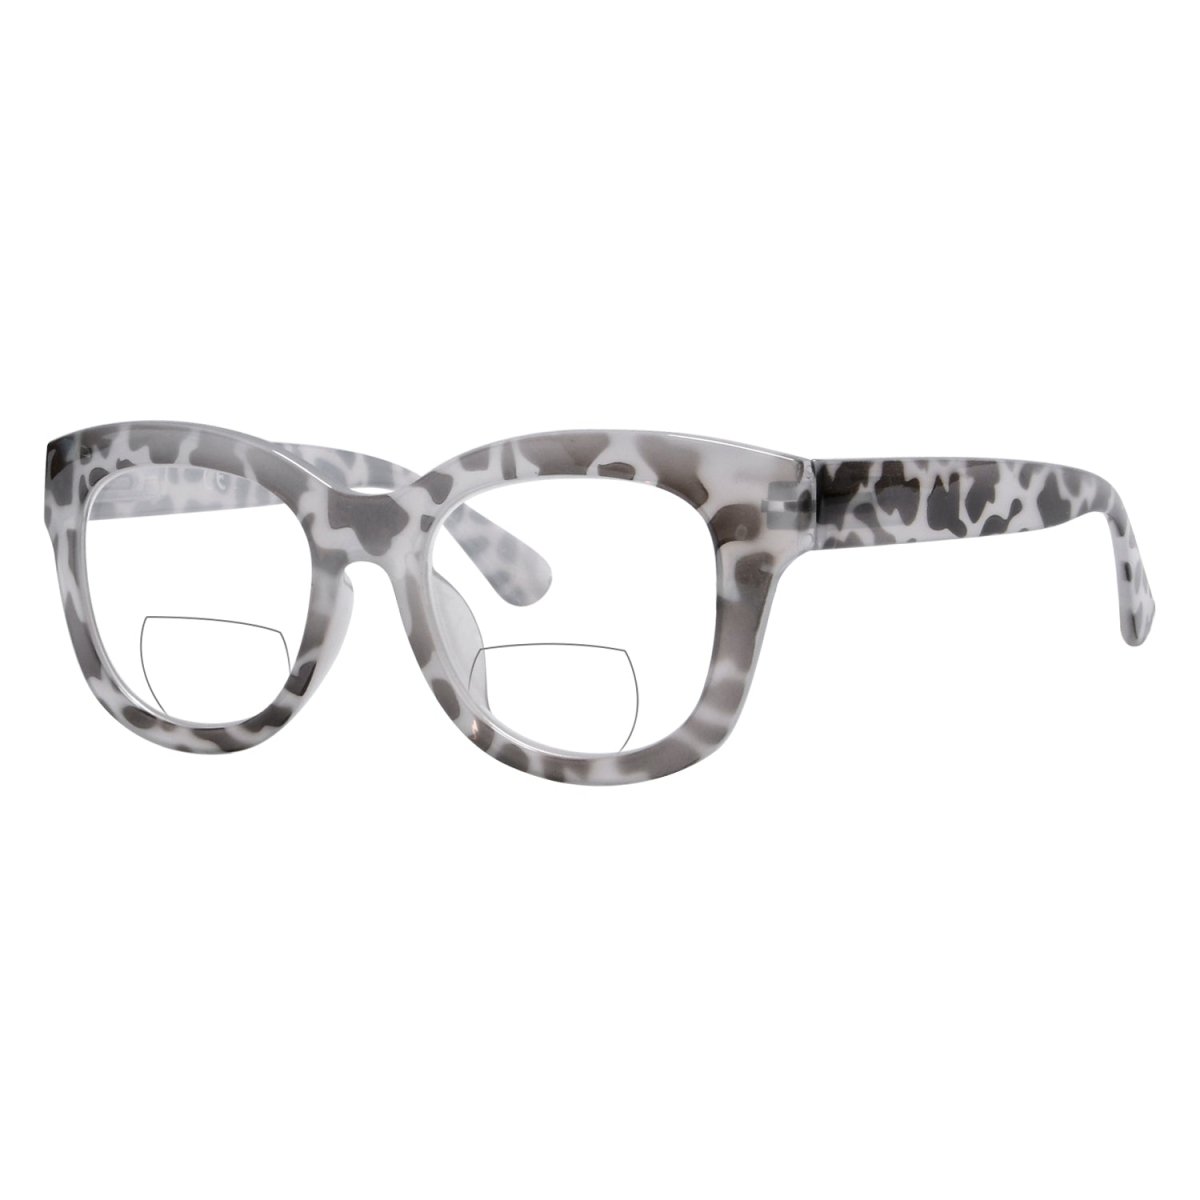 Oversized Square Bifocal Reading Glasses for Women BR1555eyekeeper.com